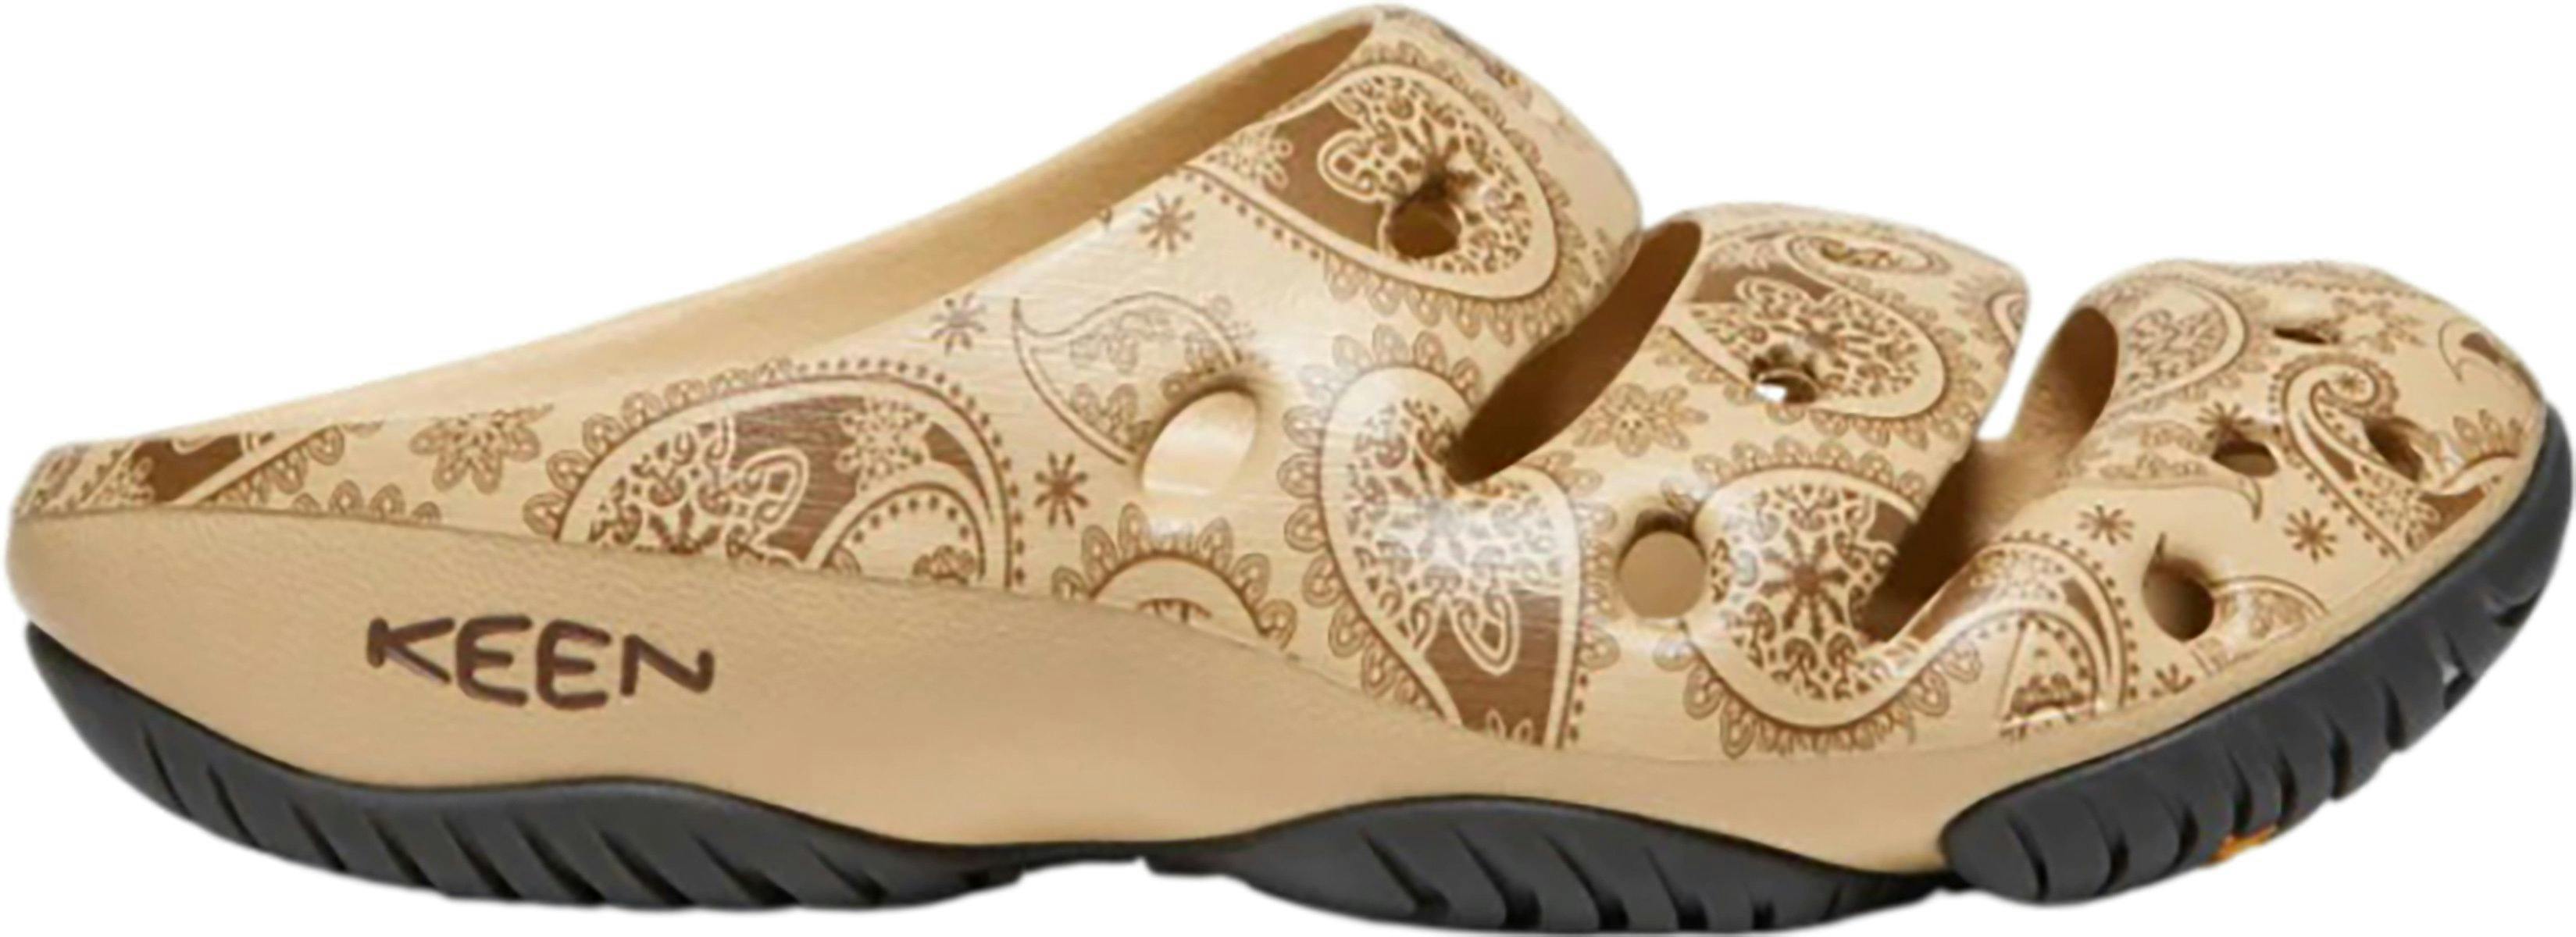 Product image for Yogui Arts Sandals - Men's